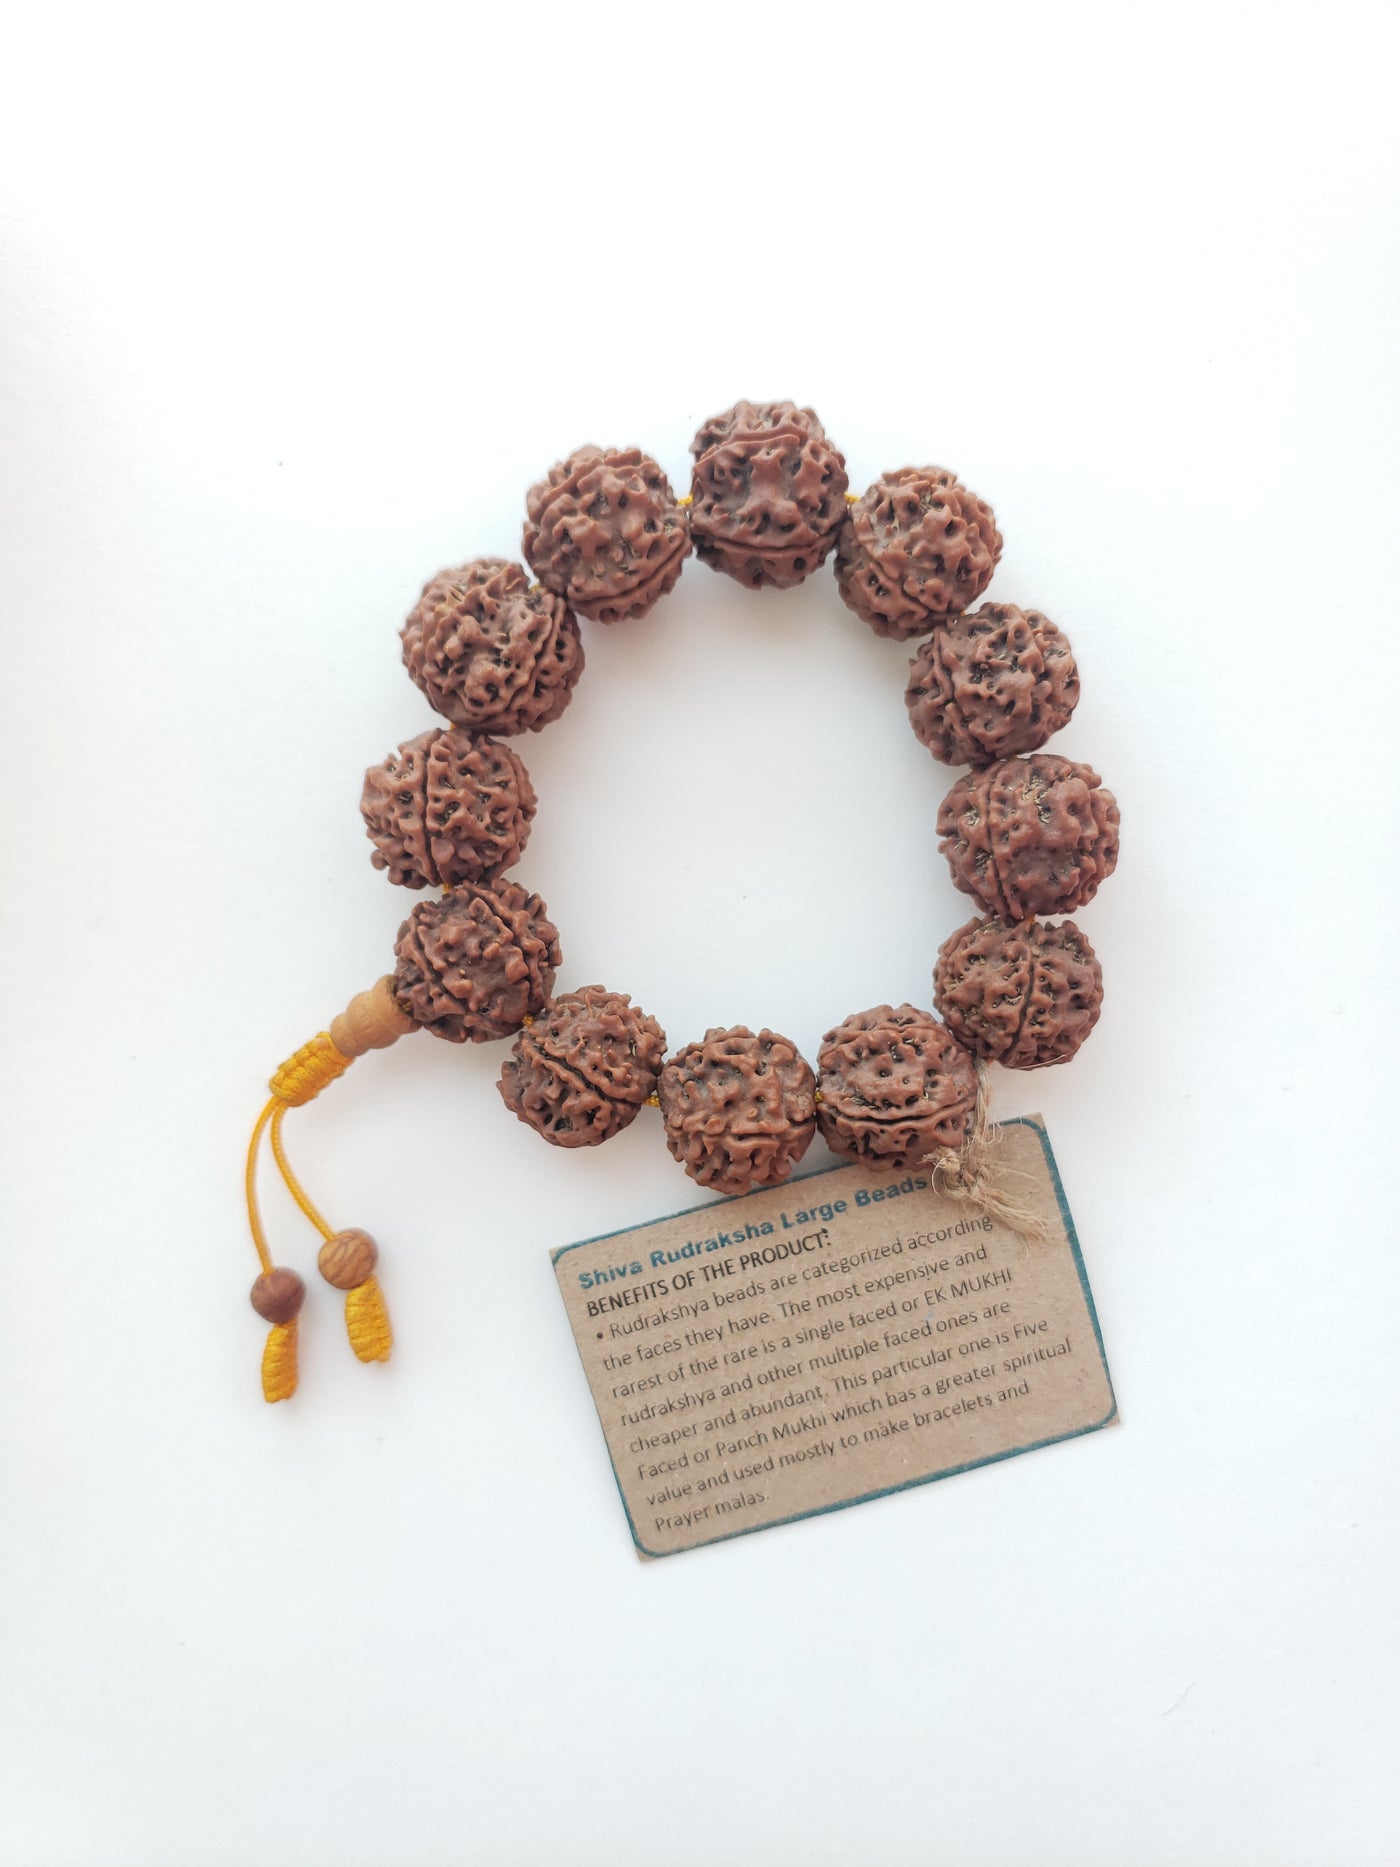 Shiva Rudraksha-Large beads